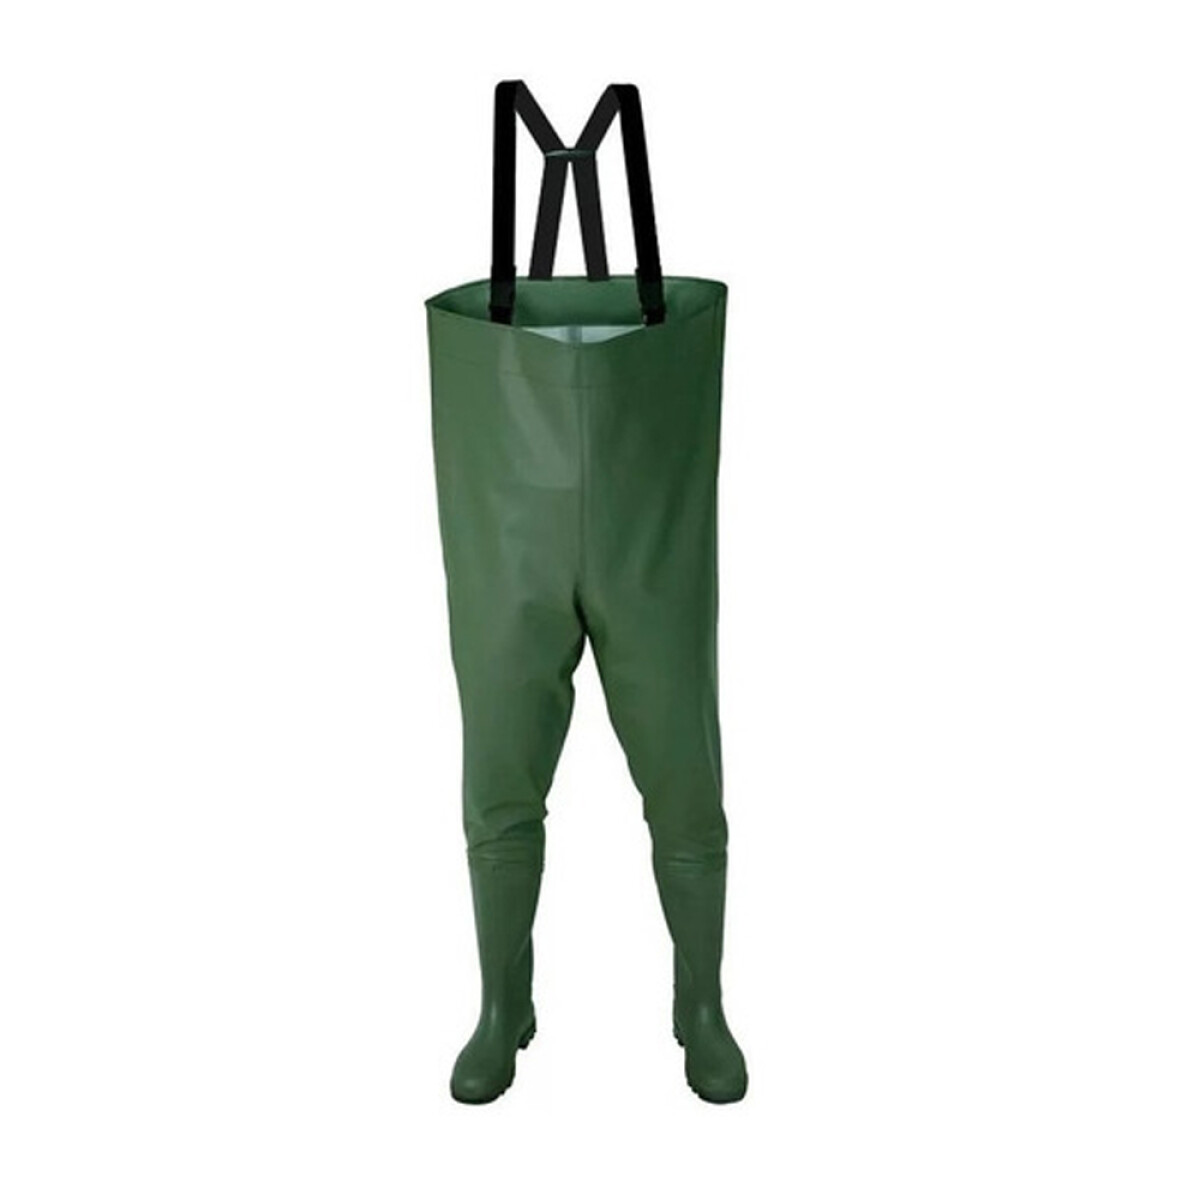 Wader Pantalon Para Pesca Completo Pvc Super Resistente - Verde 